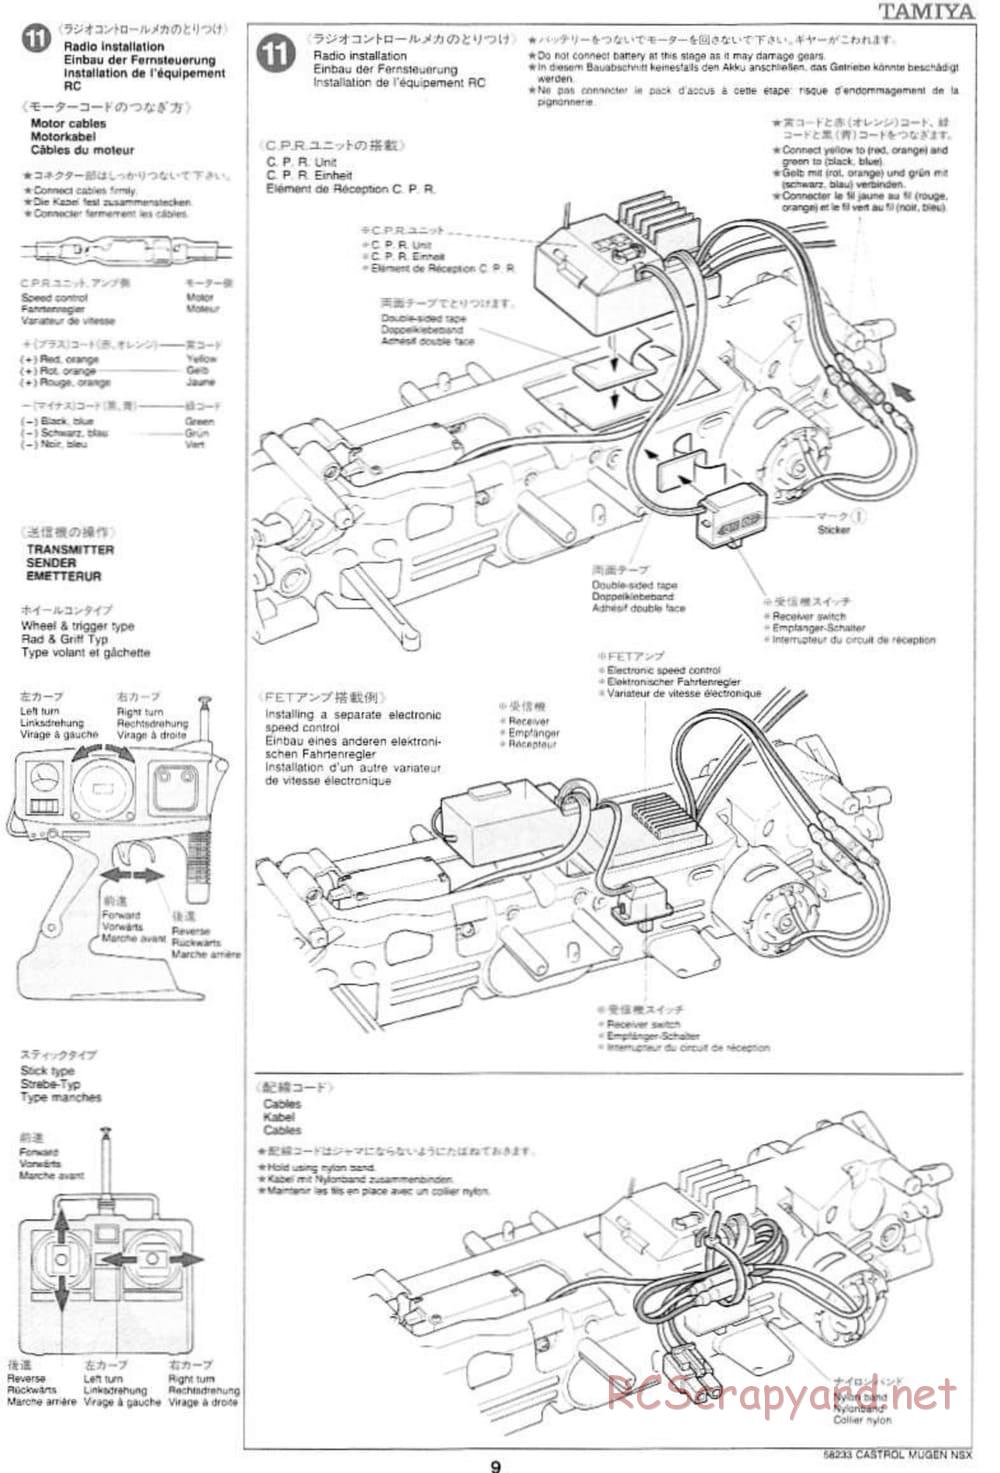 Tamiya - Castrol Mugen NSX - TL-01 Chassis - Manual - Page 9